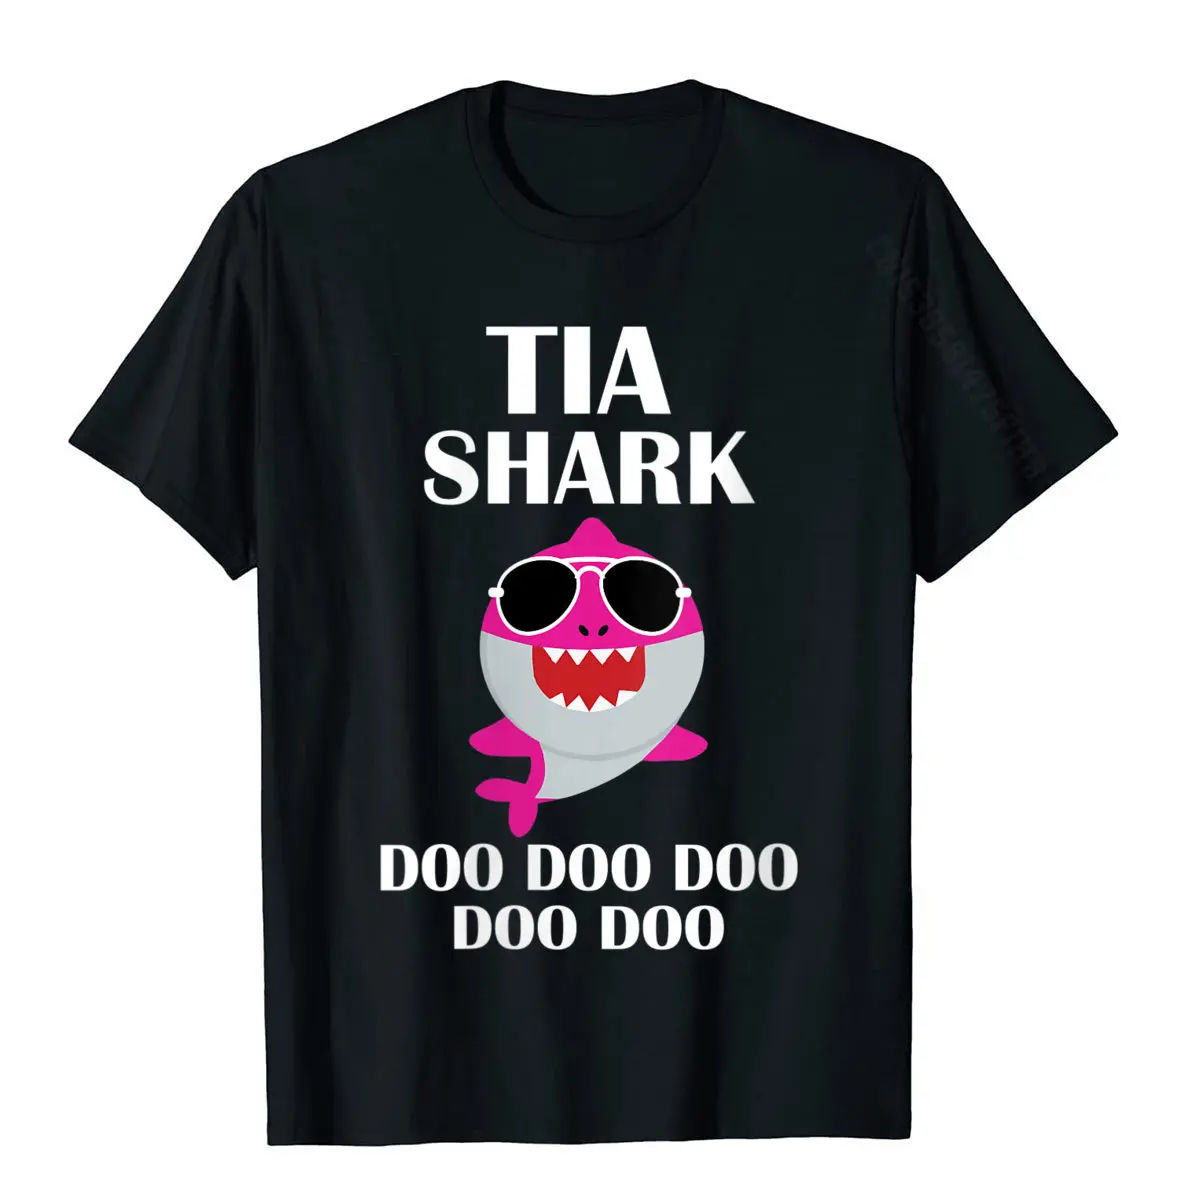 Womens Tia Shark Doo Doo Doo Mothers Day Tia Birthday Christmas T-Shirt Tops Tees Cotton Mens Top T-Shirts Funky